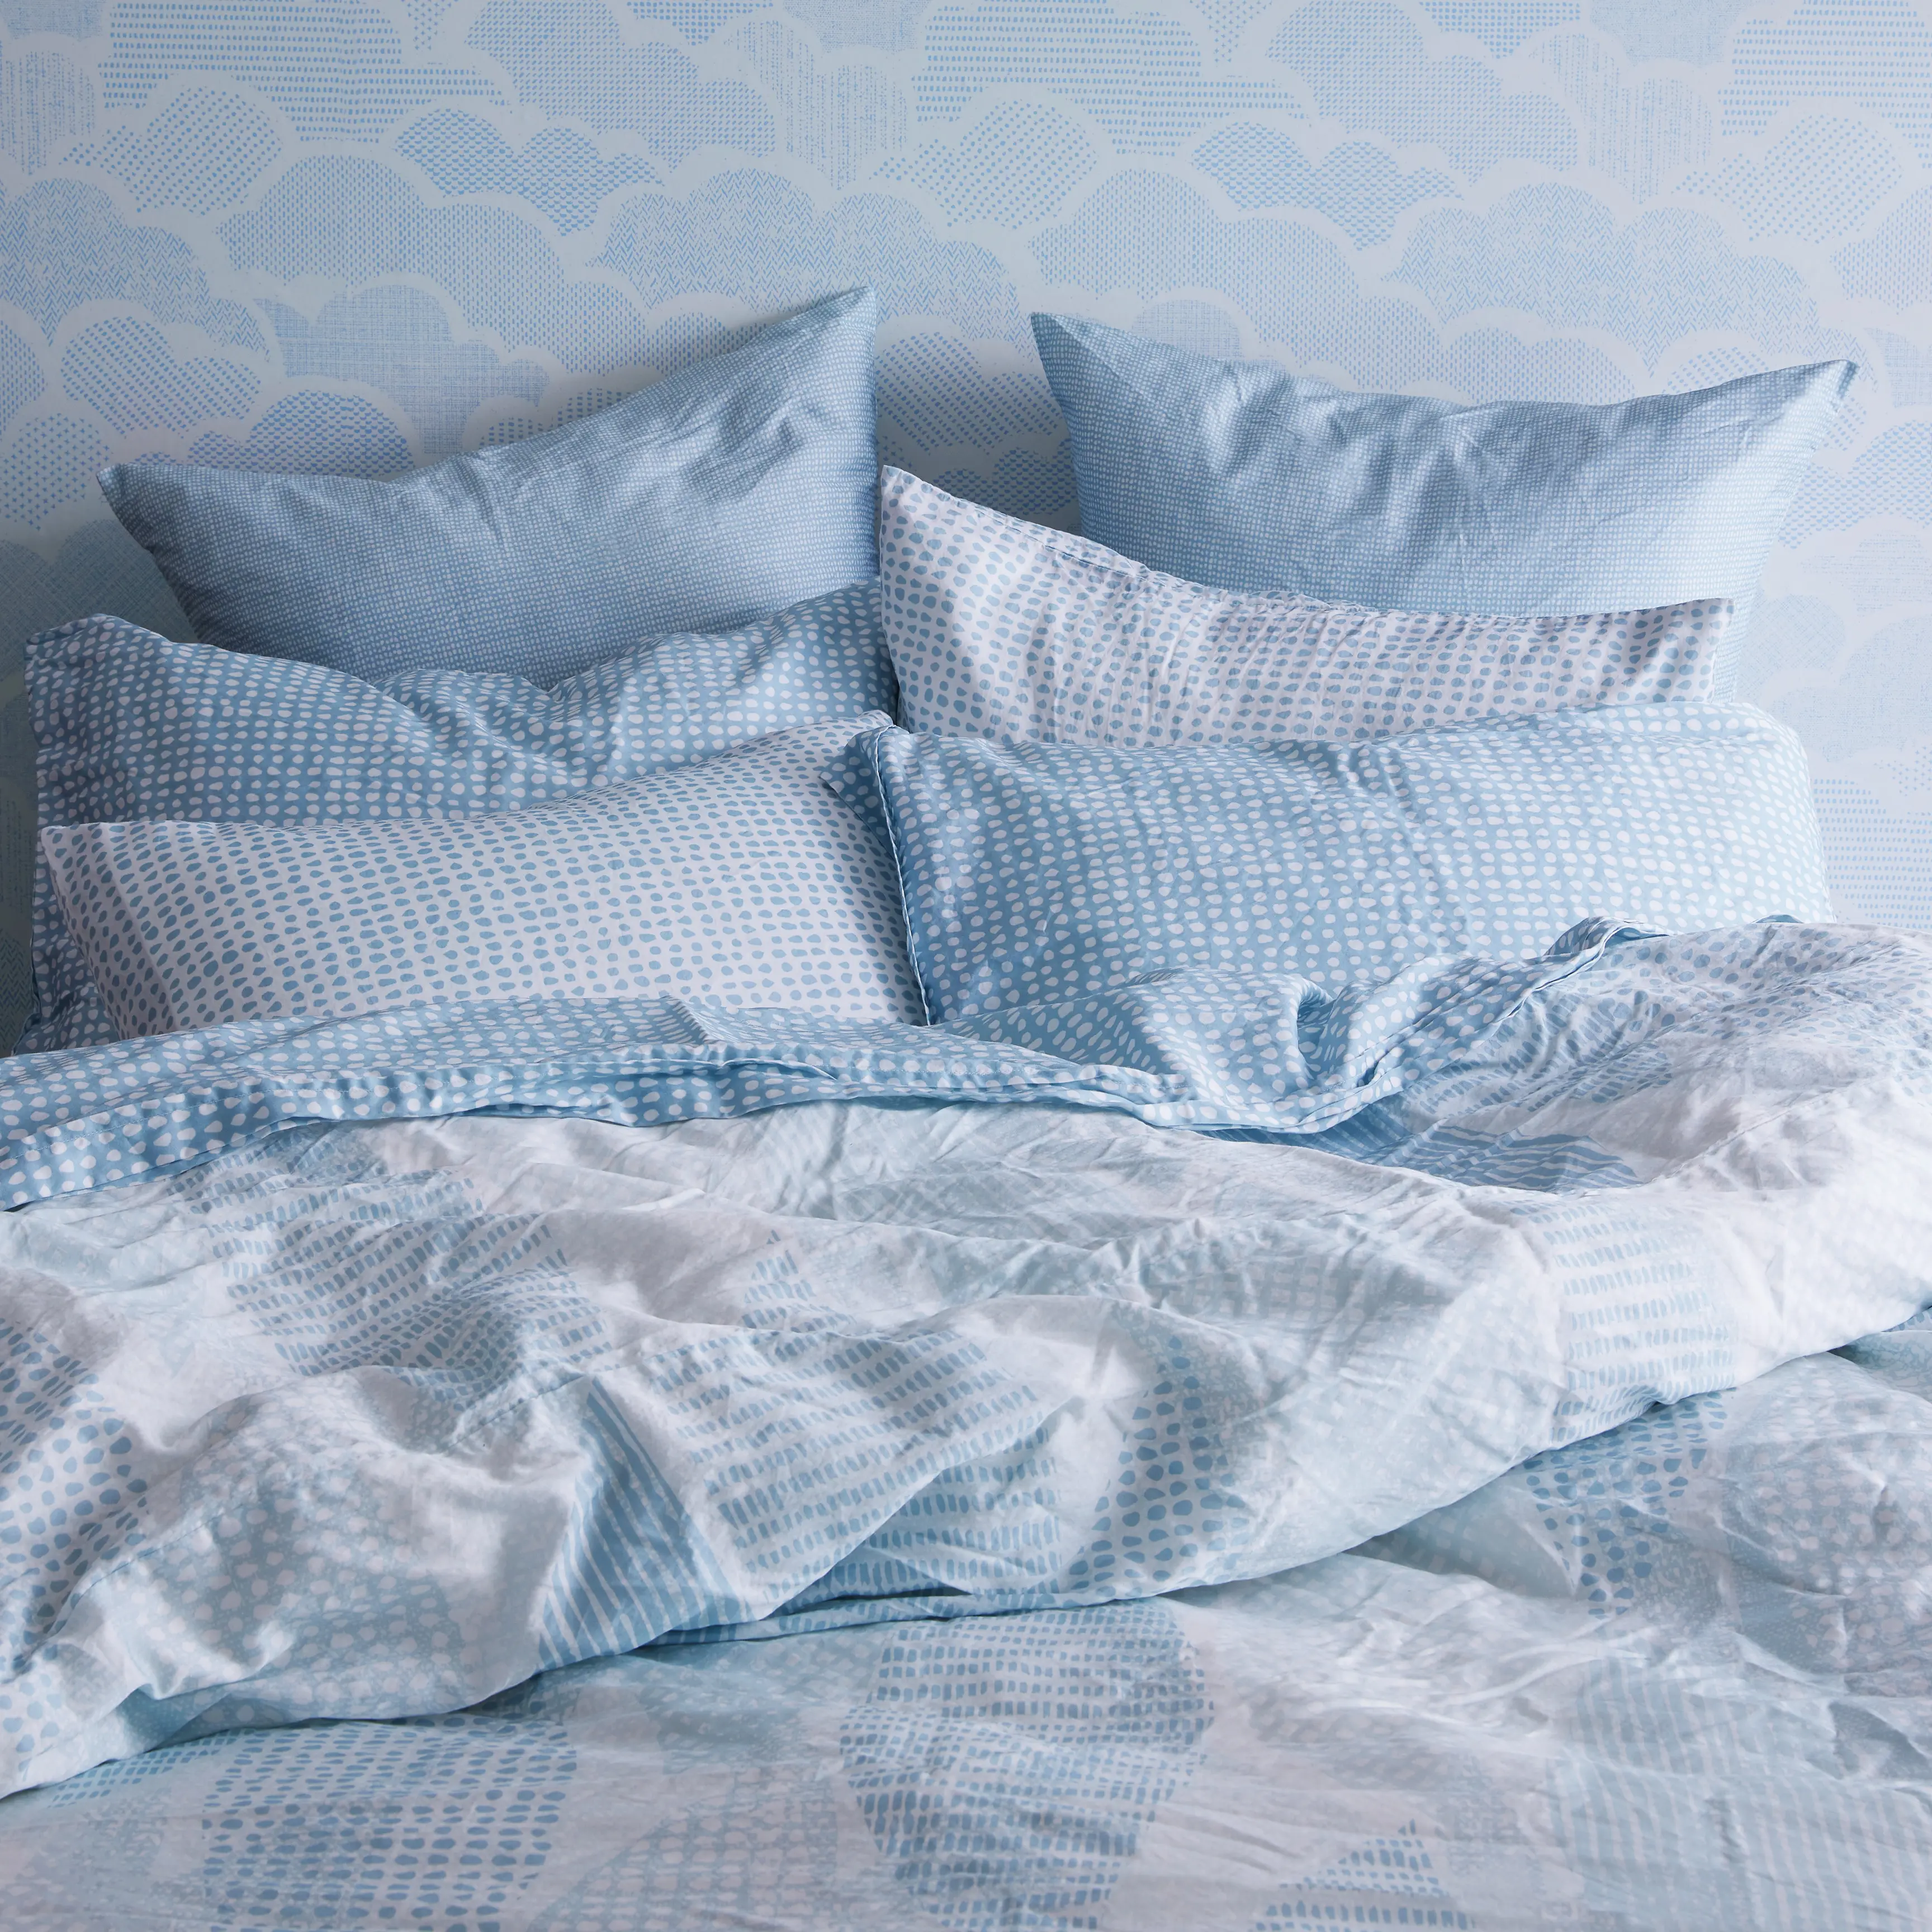 Blue patterned bedding set against matching wallpaper